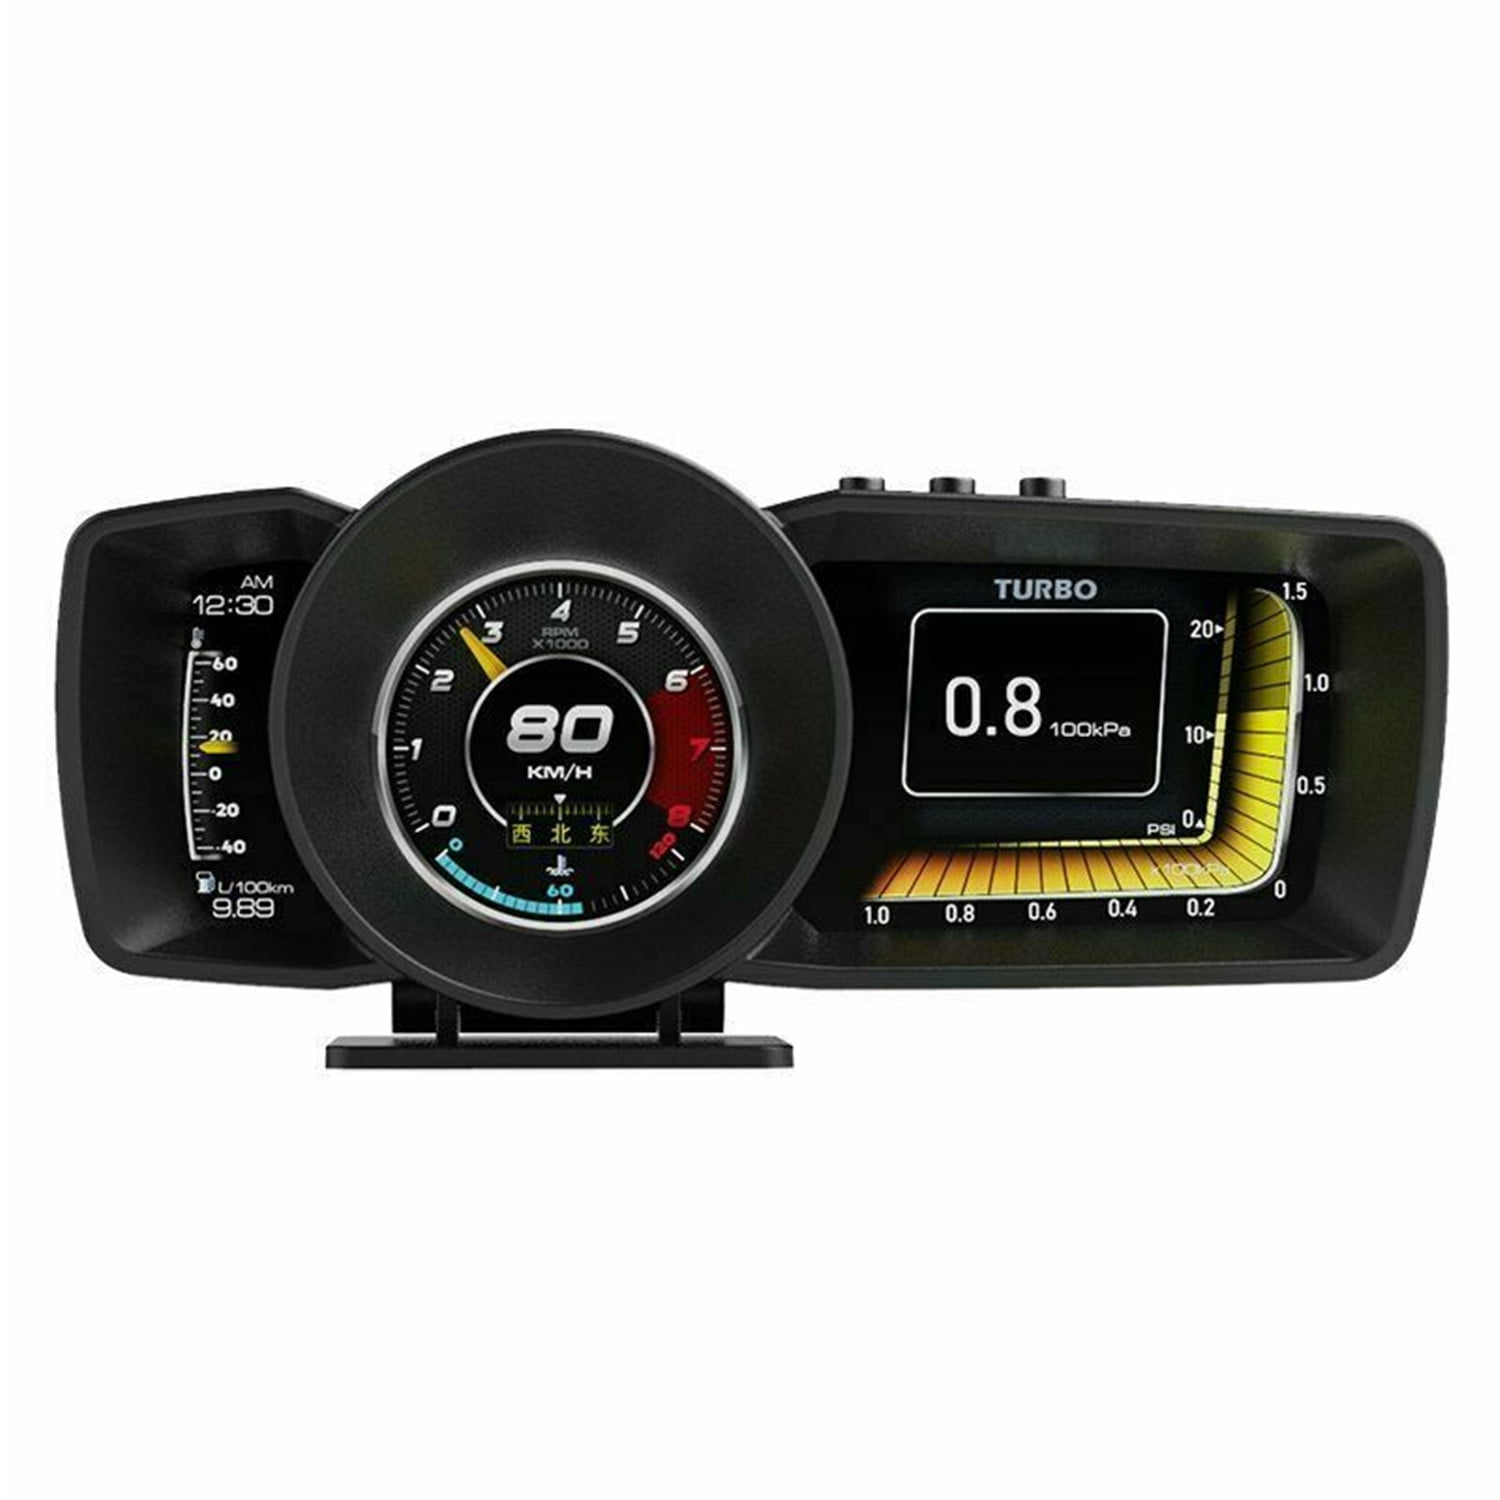 Espere Están deprimidos Odio Geloo Car HUD Head-up Display OBD2+GPS Speedometer Digital HUD Display  Turbo RPM Alarm for Vehicle - Walmart.com